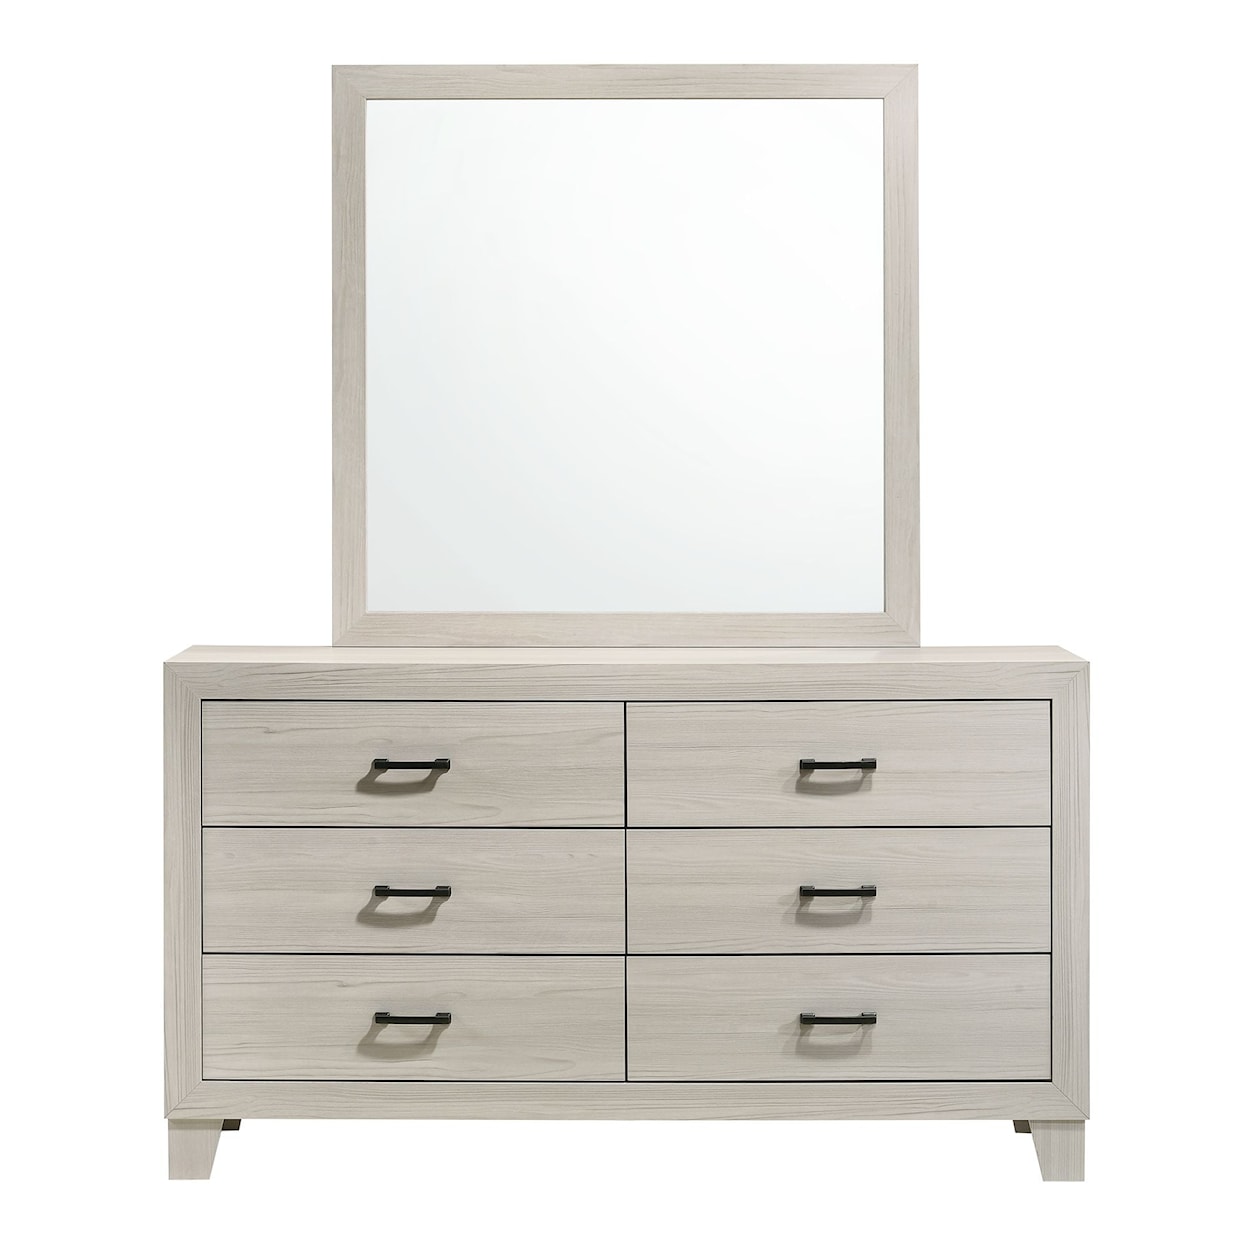 Elements International Makayla Dresser Mirror